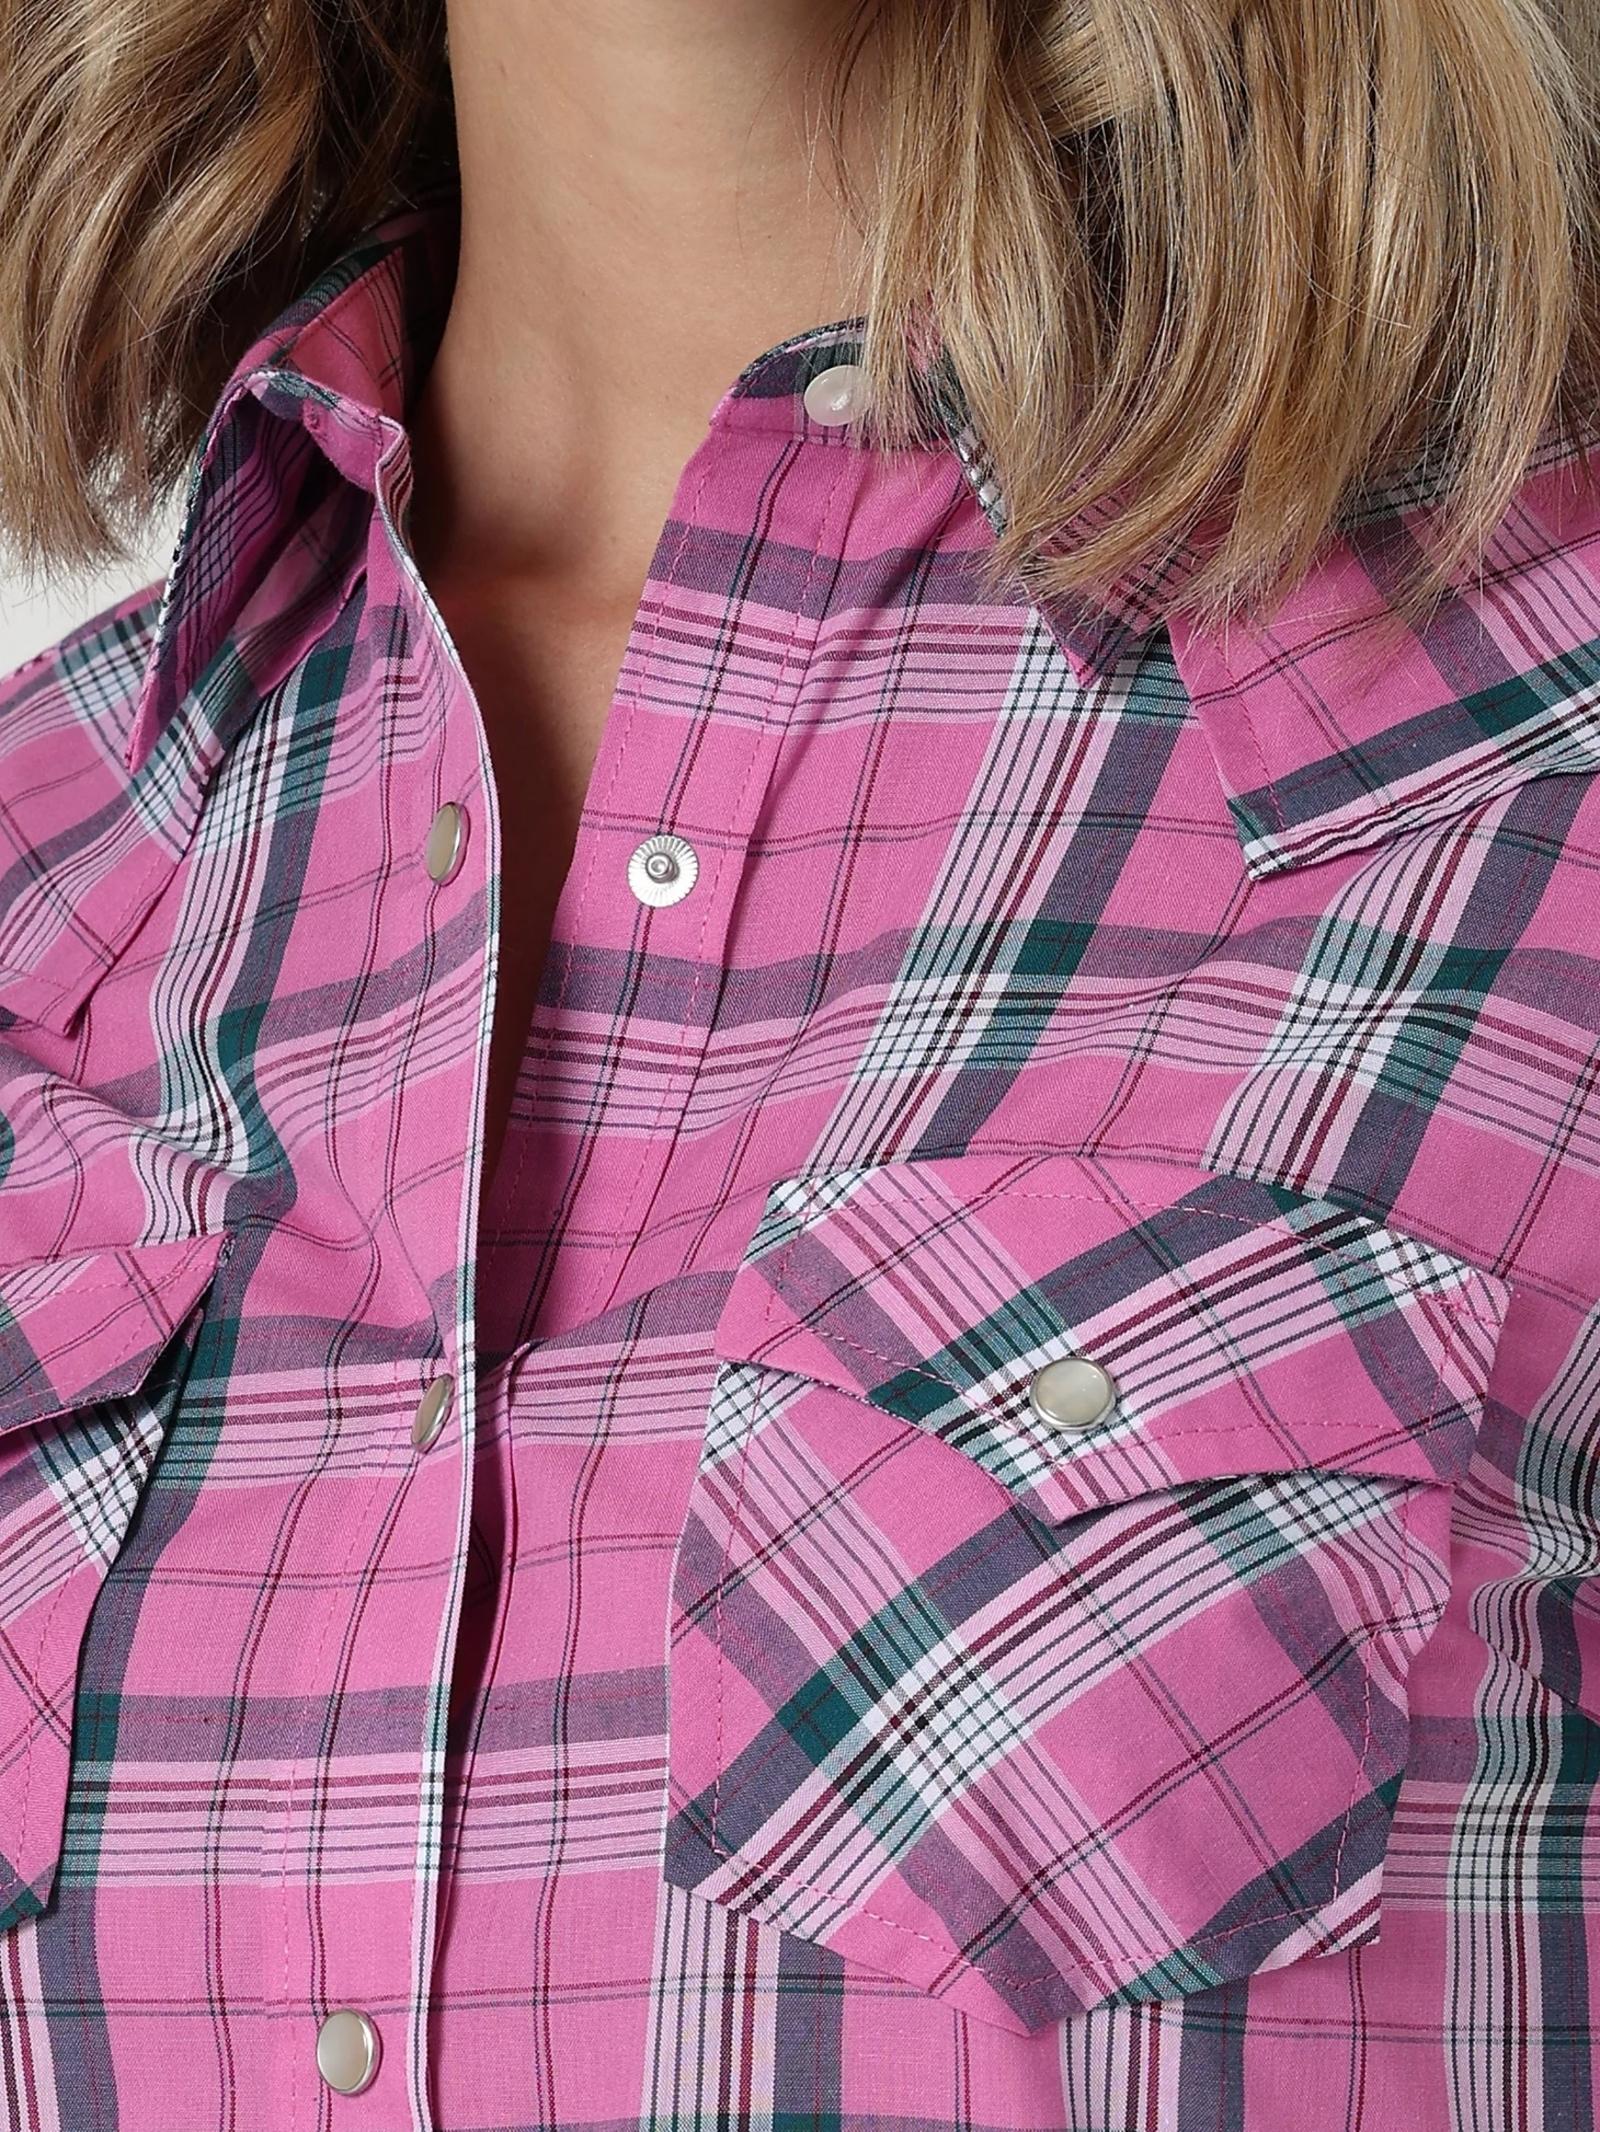 Wrangler Women's Essential Short Sleeve Plaid Western Snap Top 